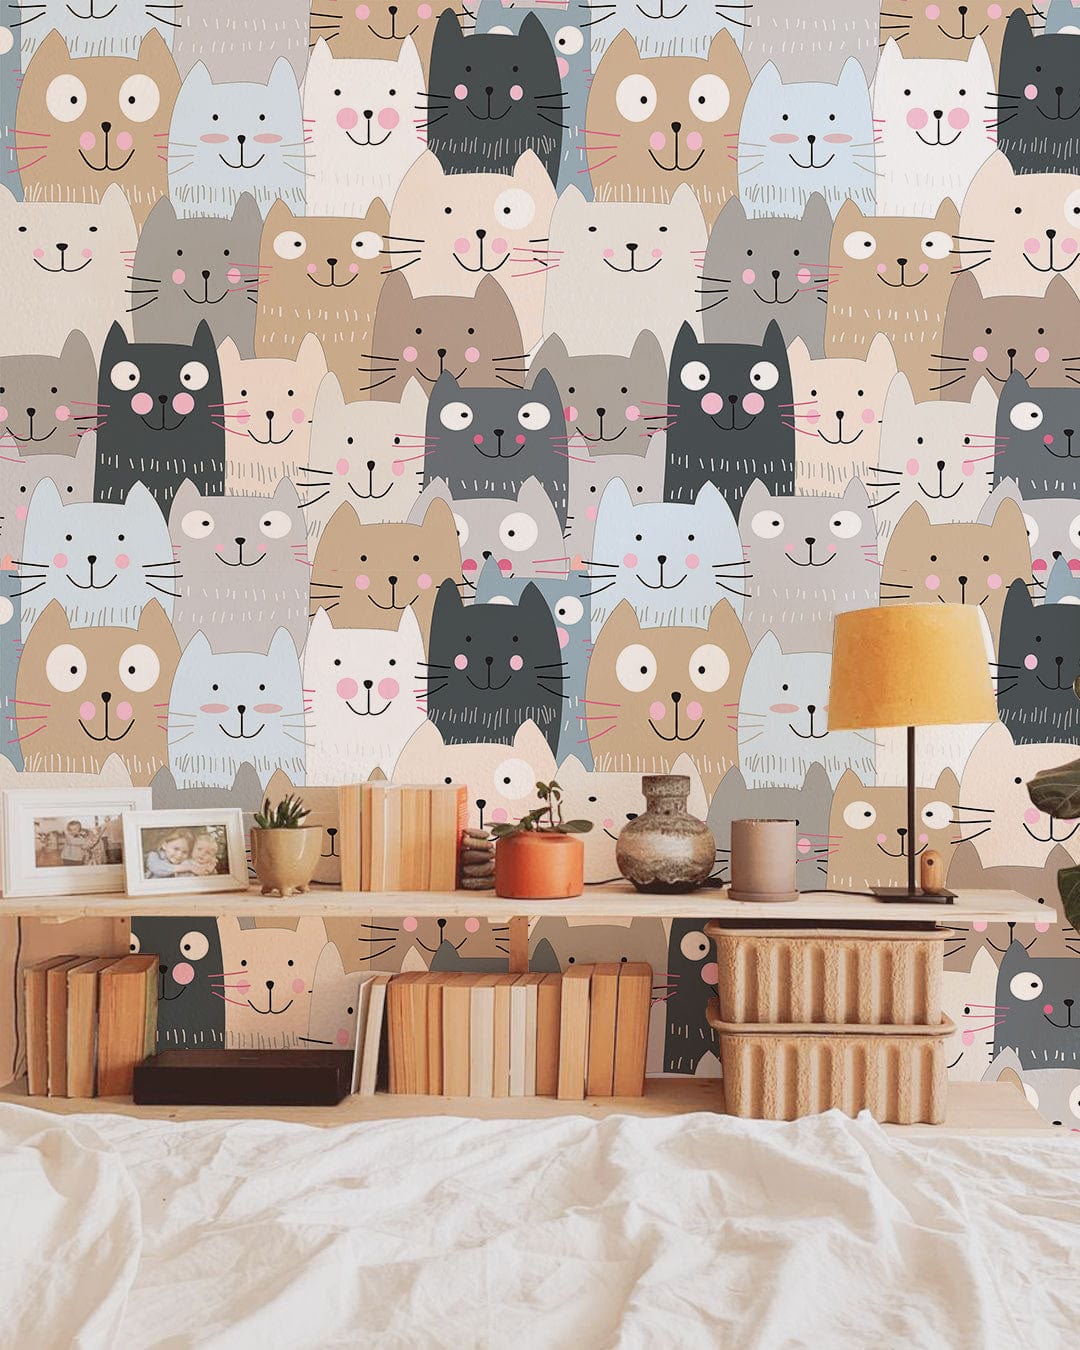 Smiling Cats cartoon wallpaper mural for bedroom